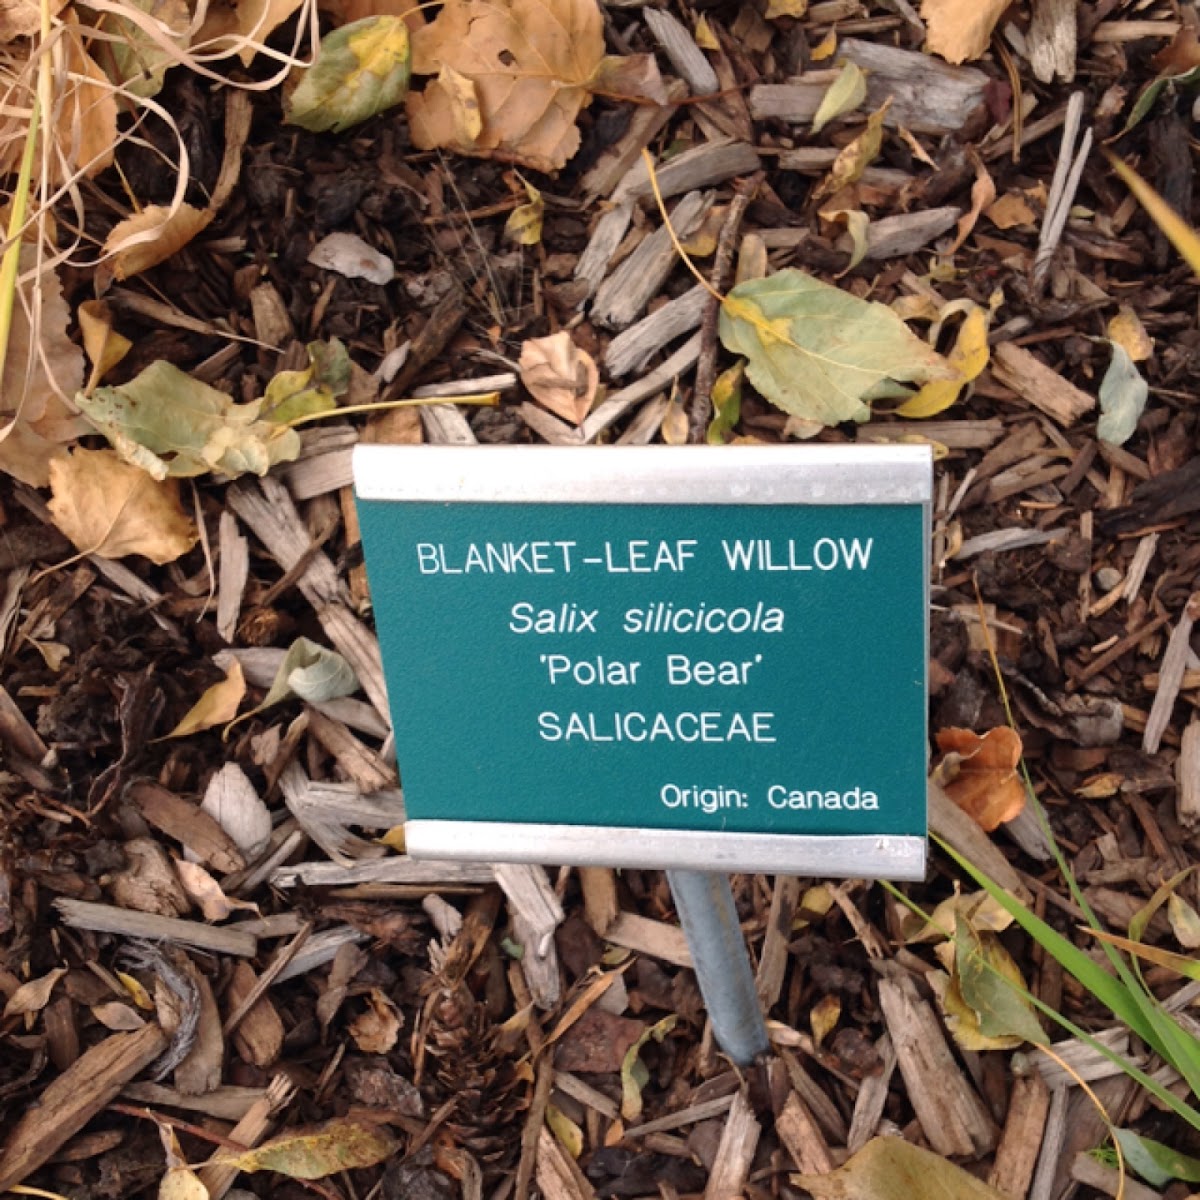 Blanket-Leaf Willow or Polar Bear Willow